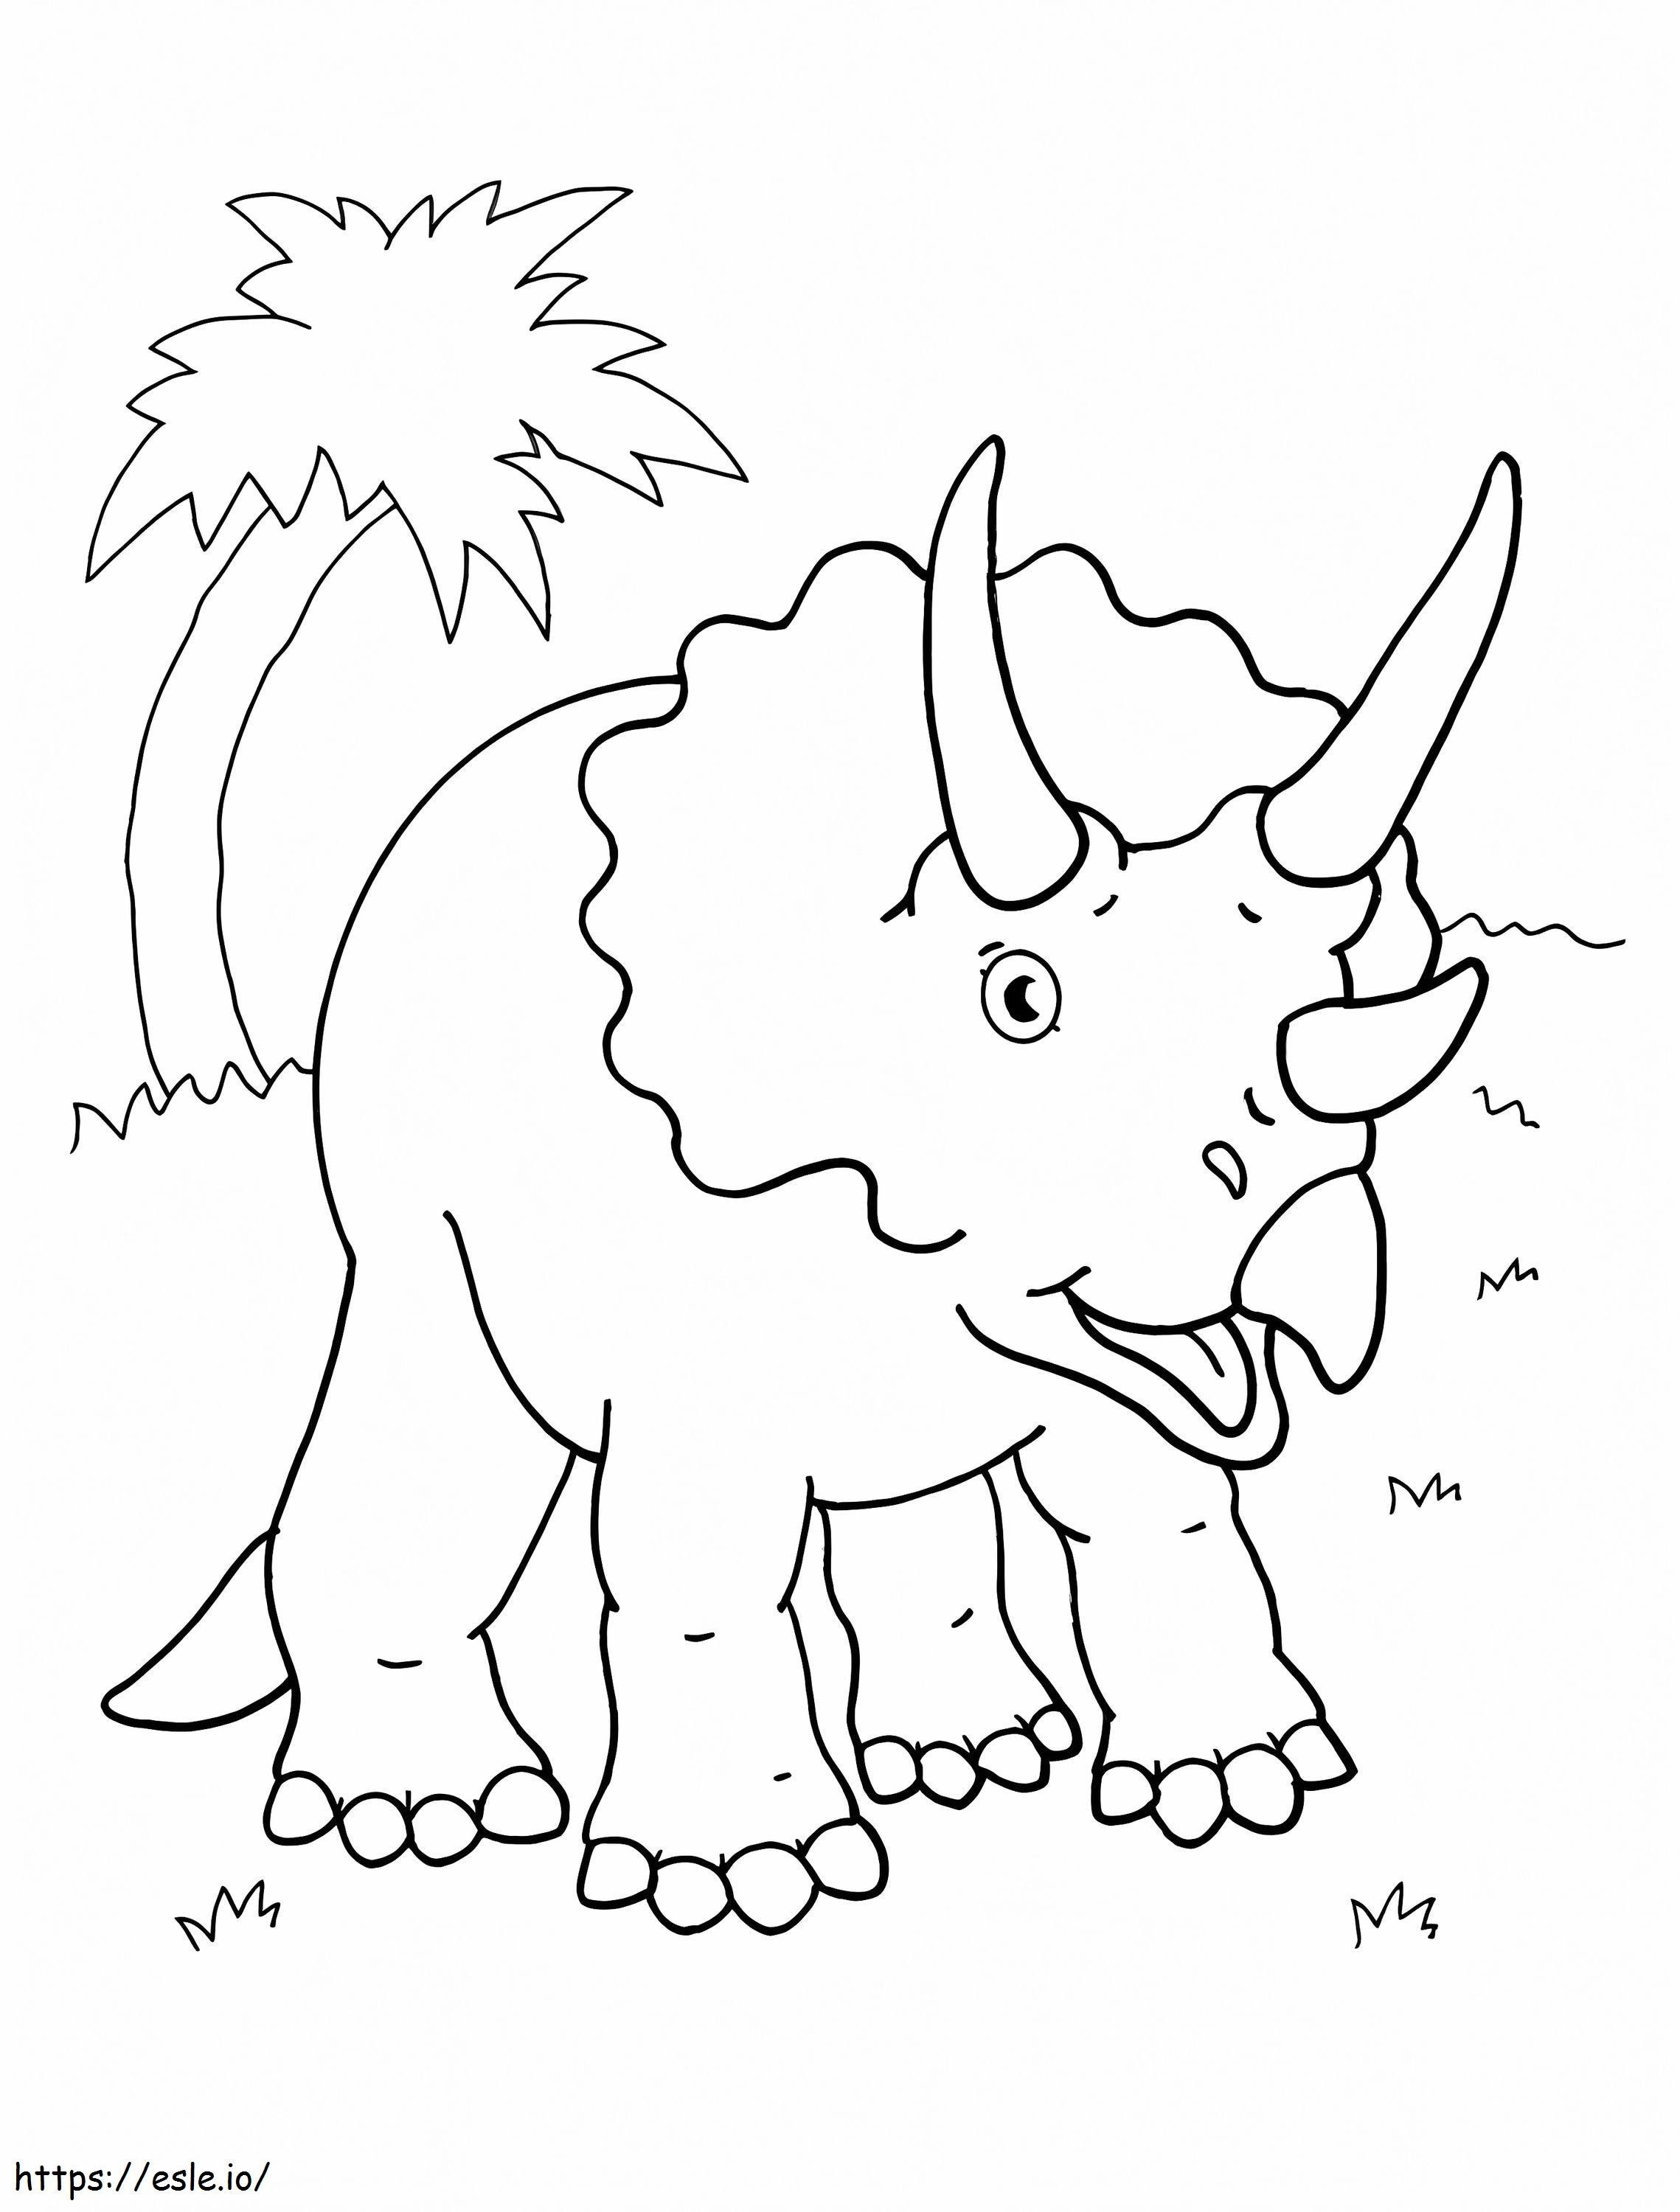 Coloriage Dinosaure Tricératops 2 à imprimer dessin